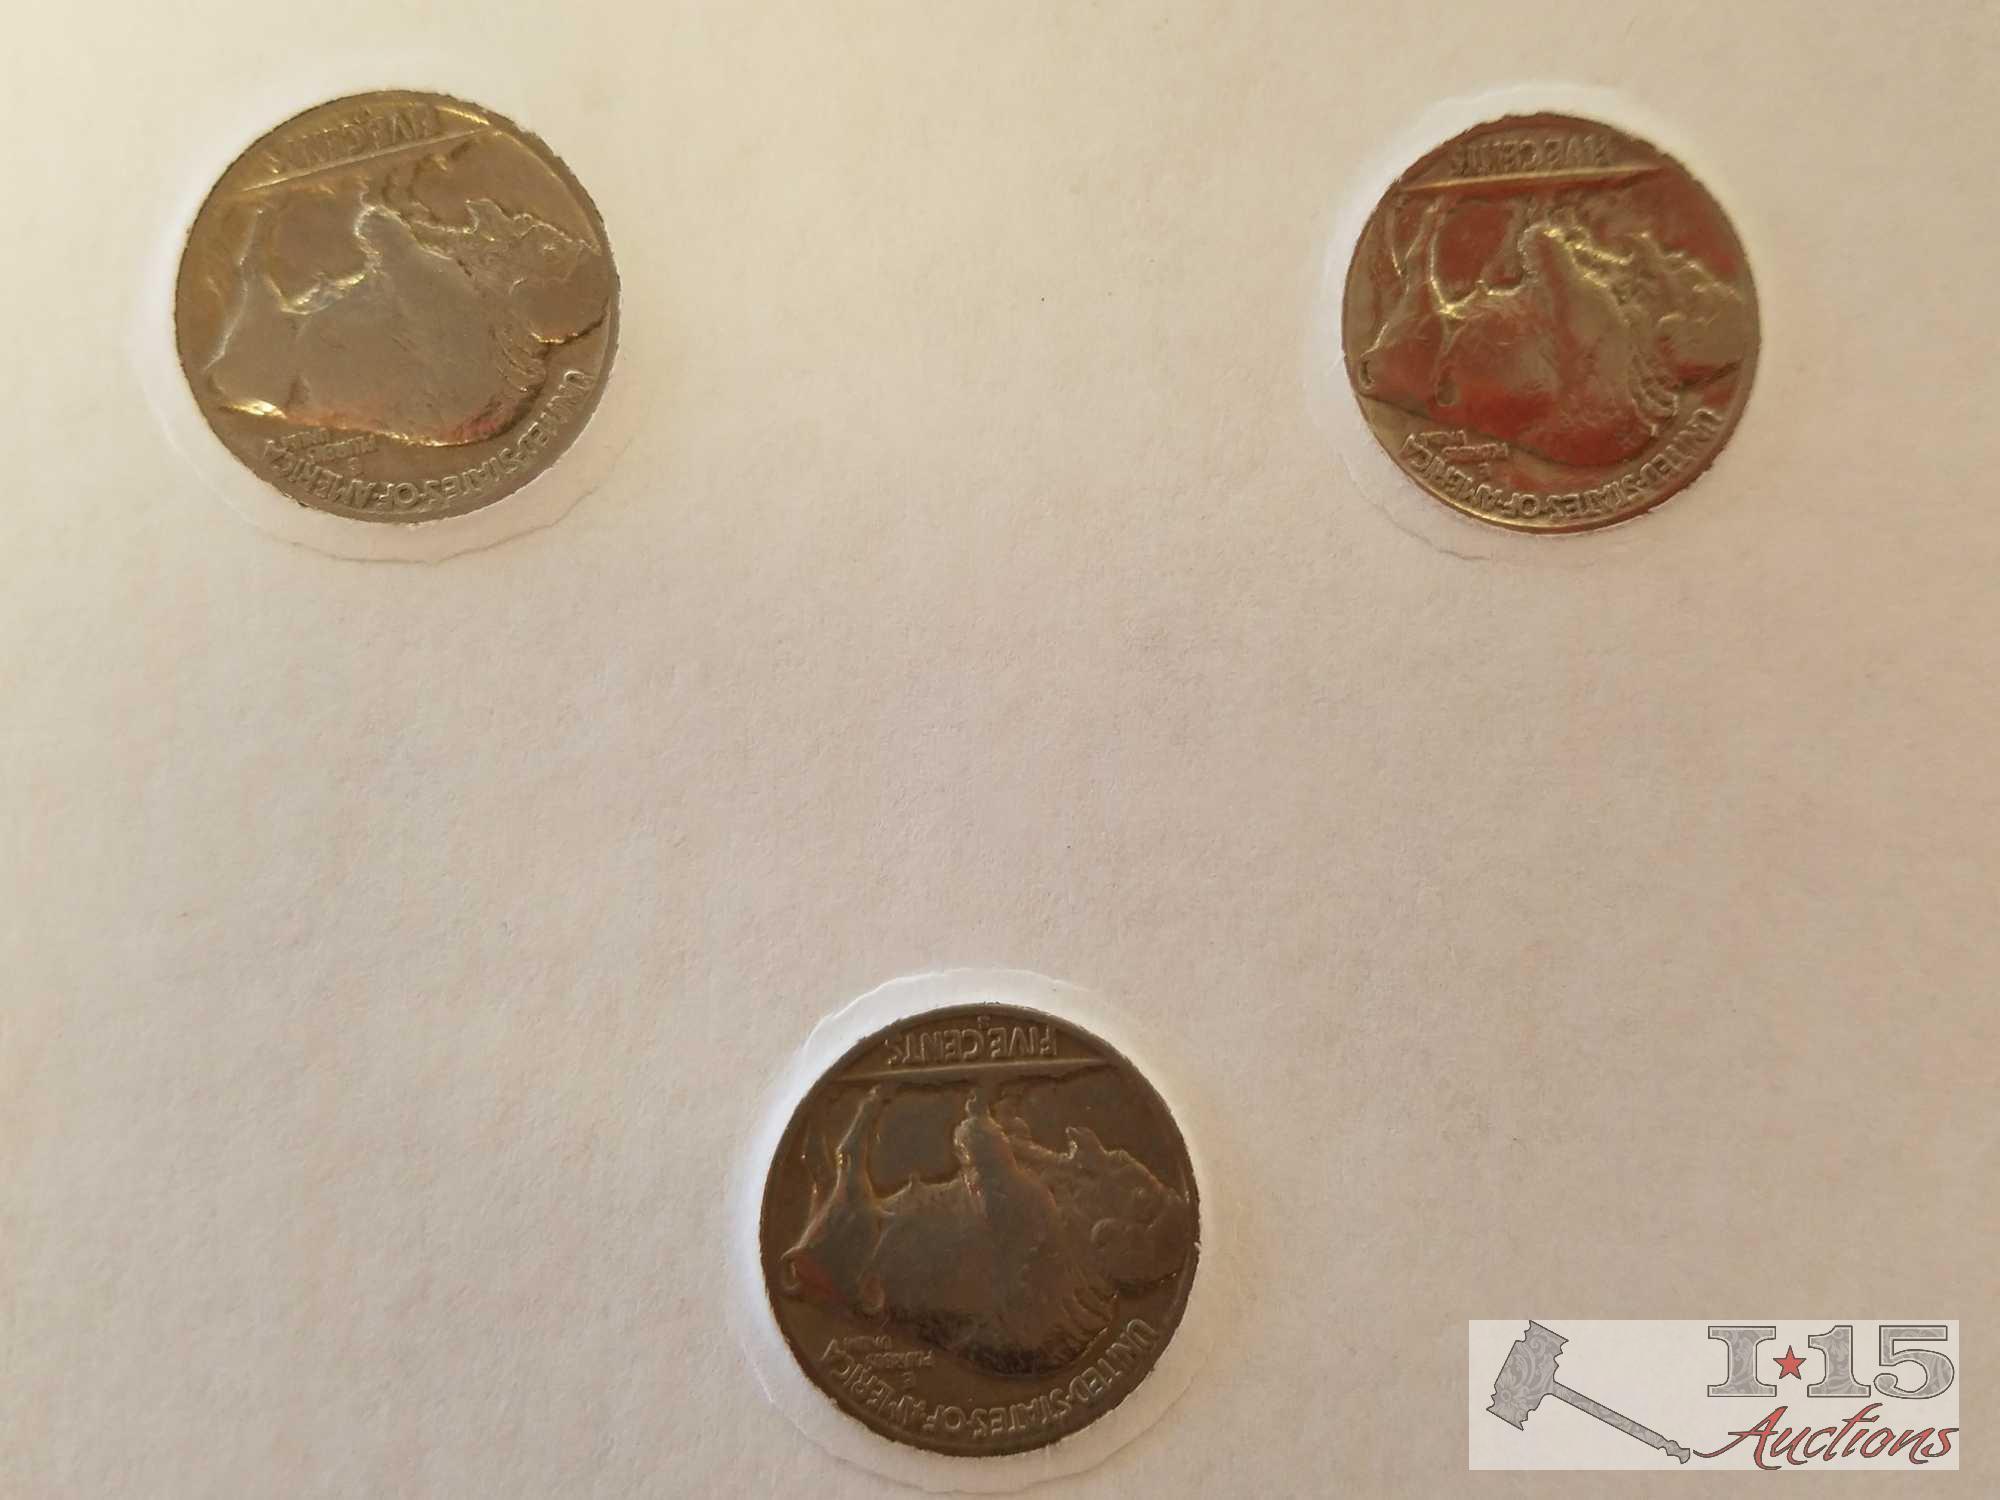 Collector albums American nickels, u.s. historic coins, buffalo nickel mint mark